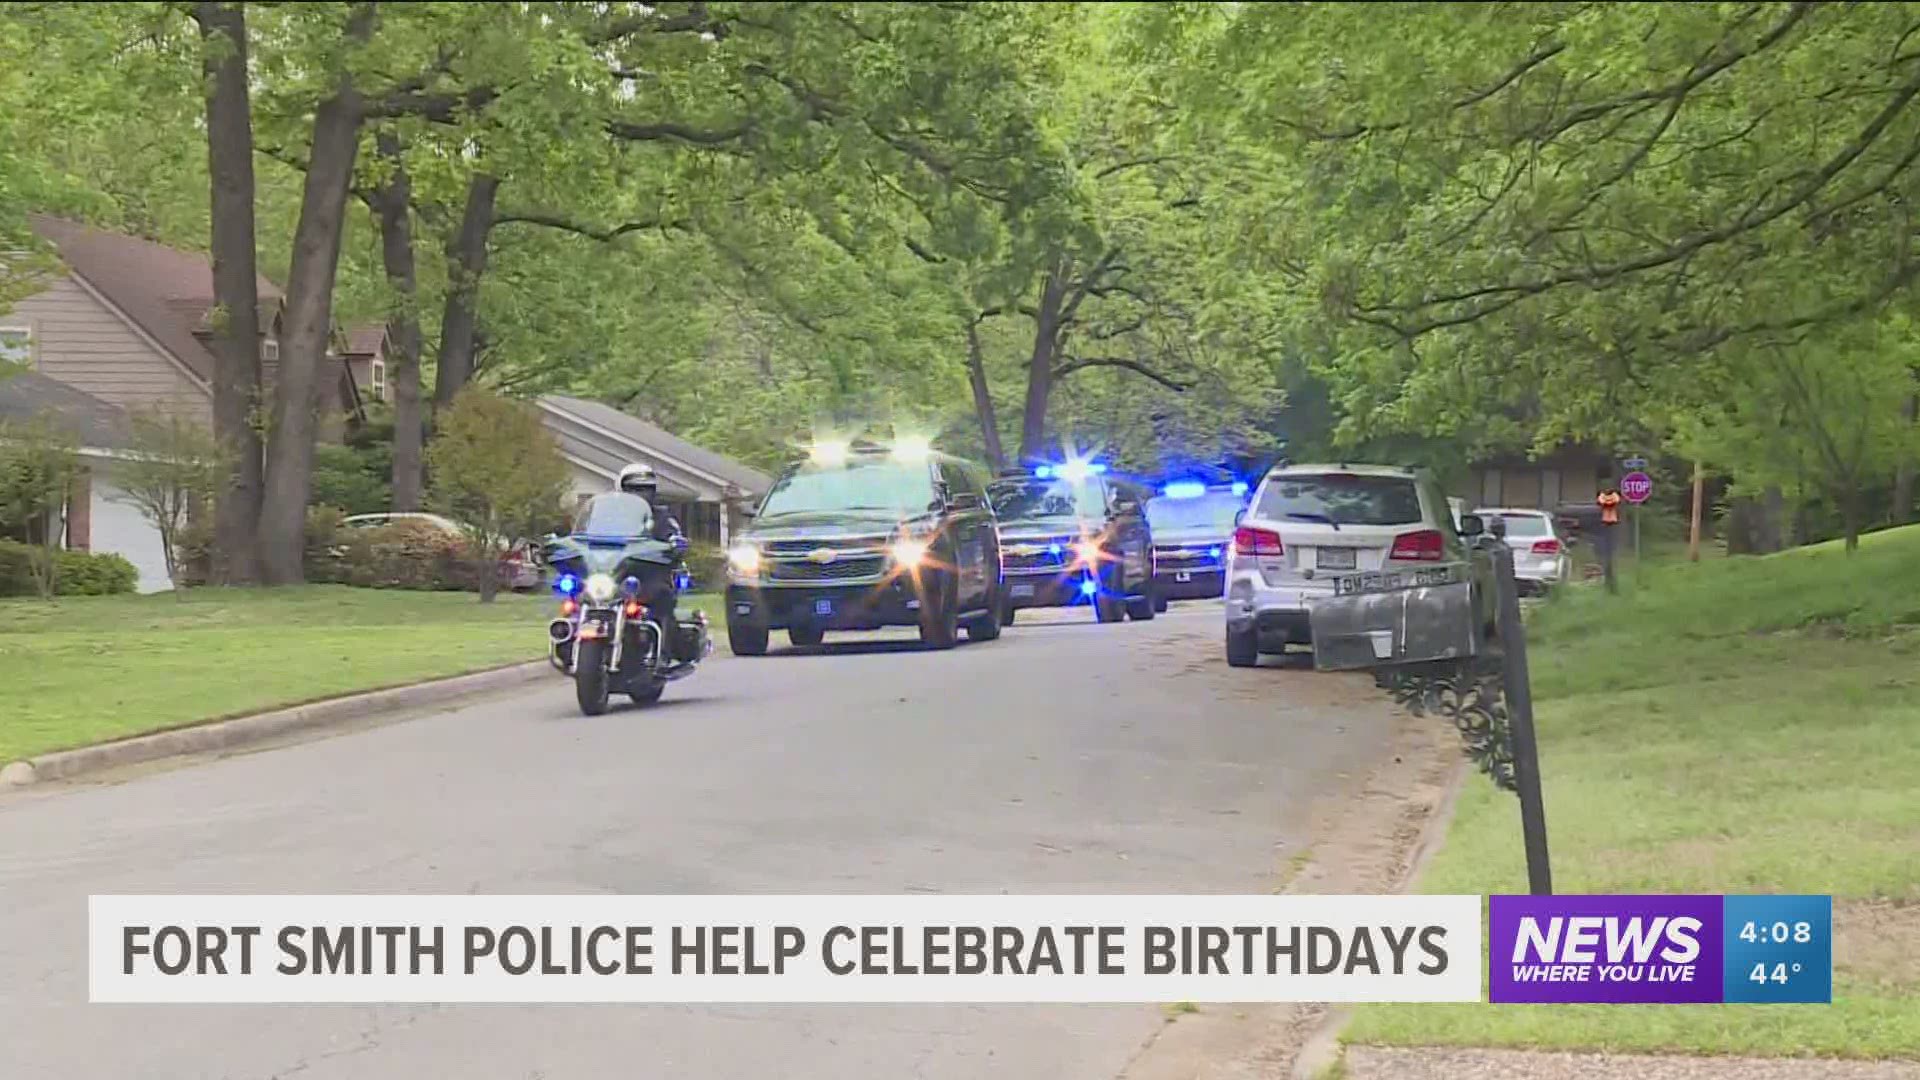 Fort Smith Police help celebrate birthdays.